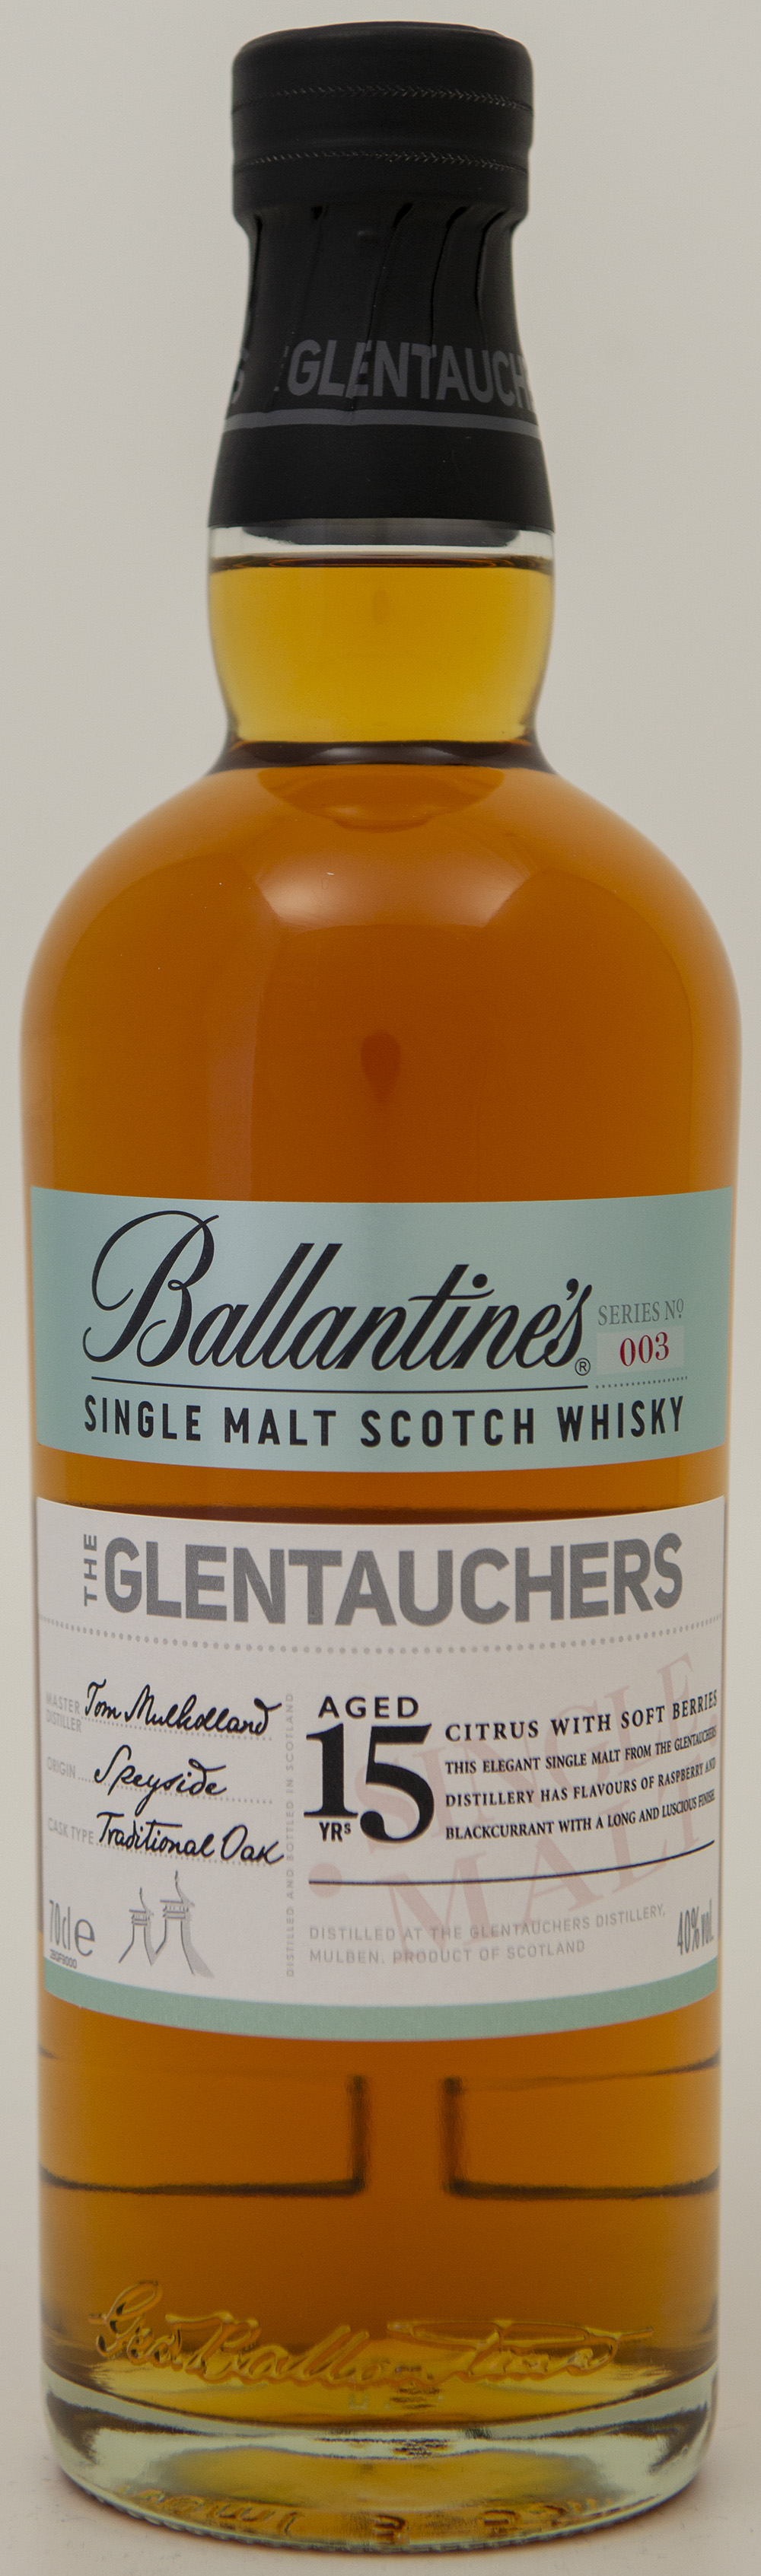 Billede: DSC_3927 - Ballantines Serie 003 - The Glentauchers 15.jpg